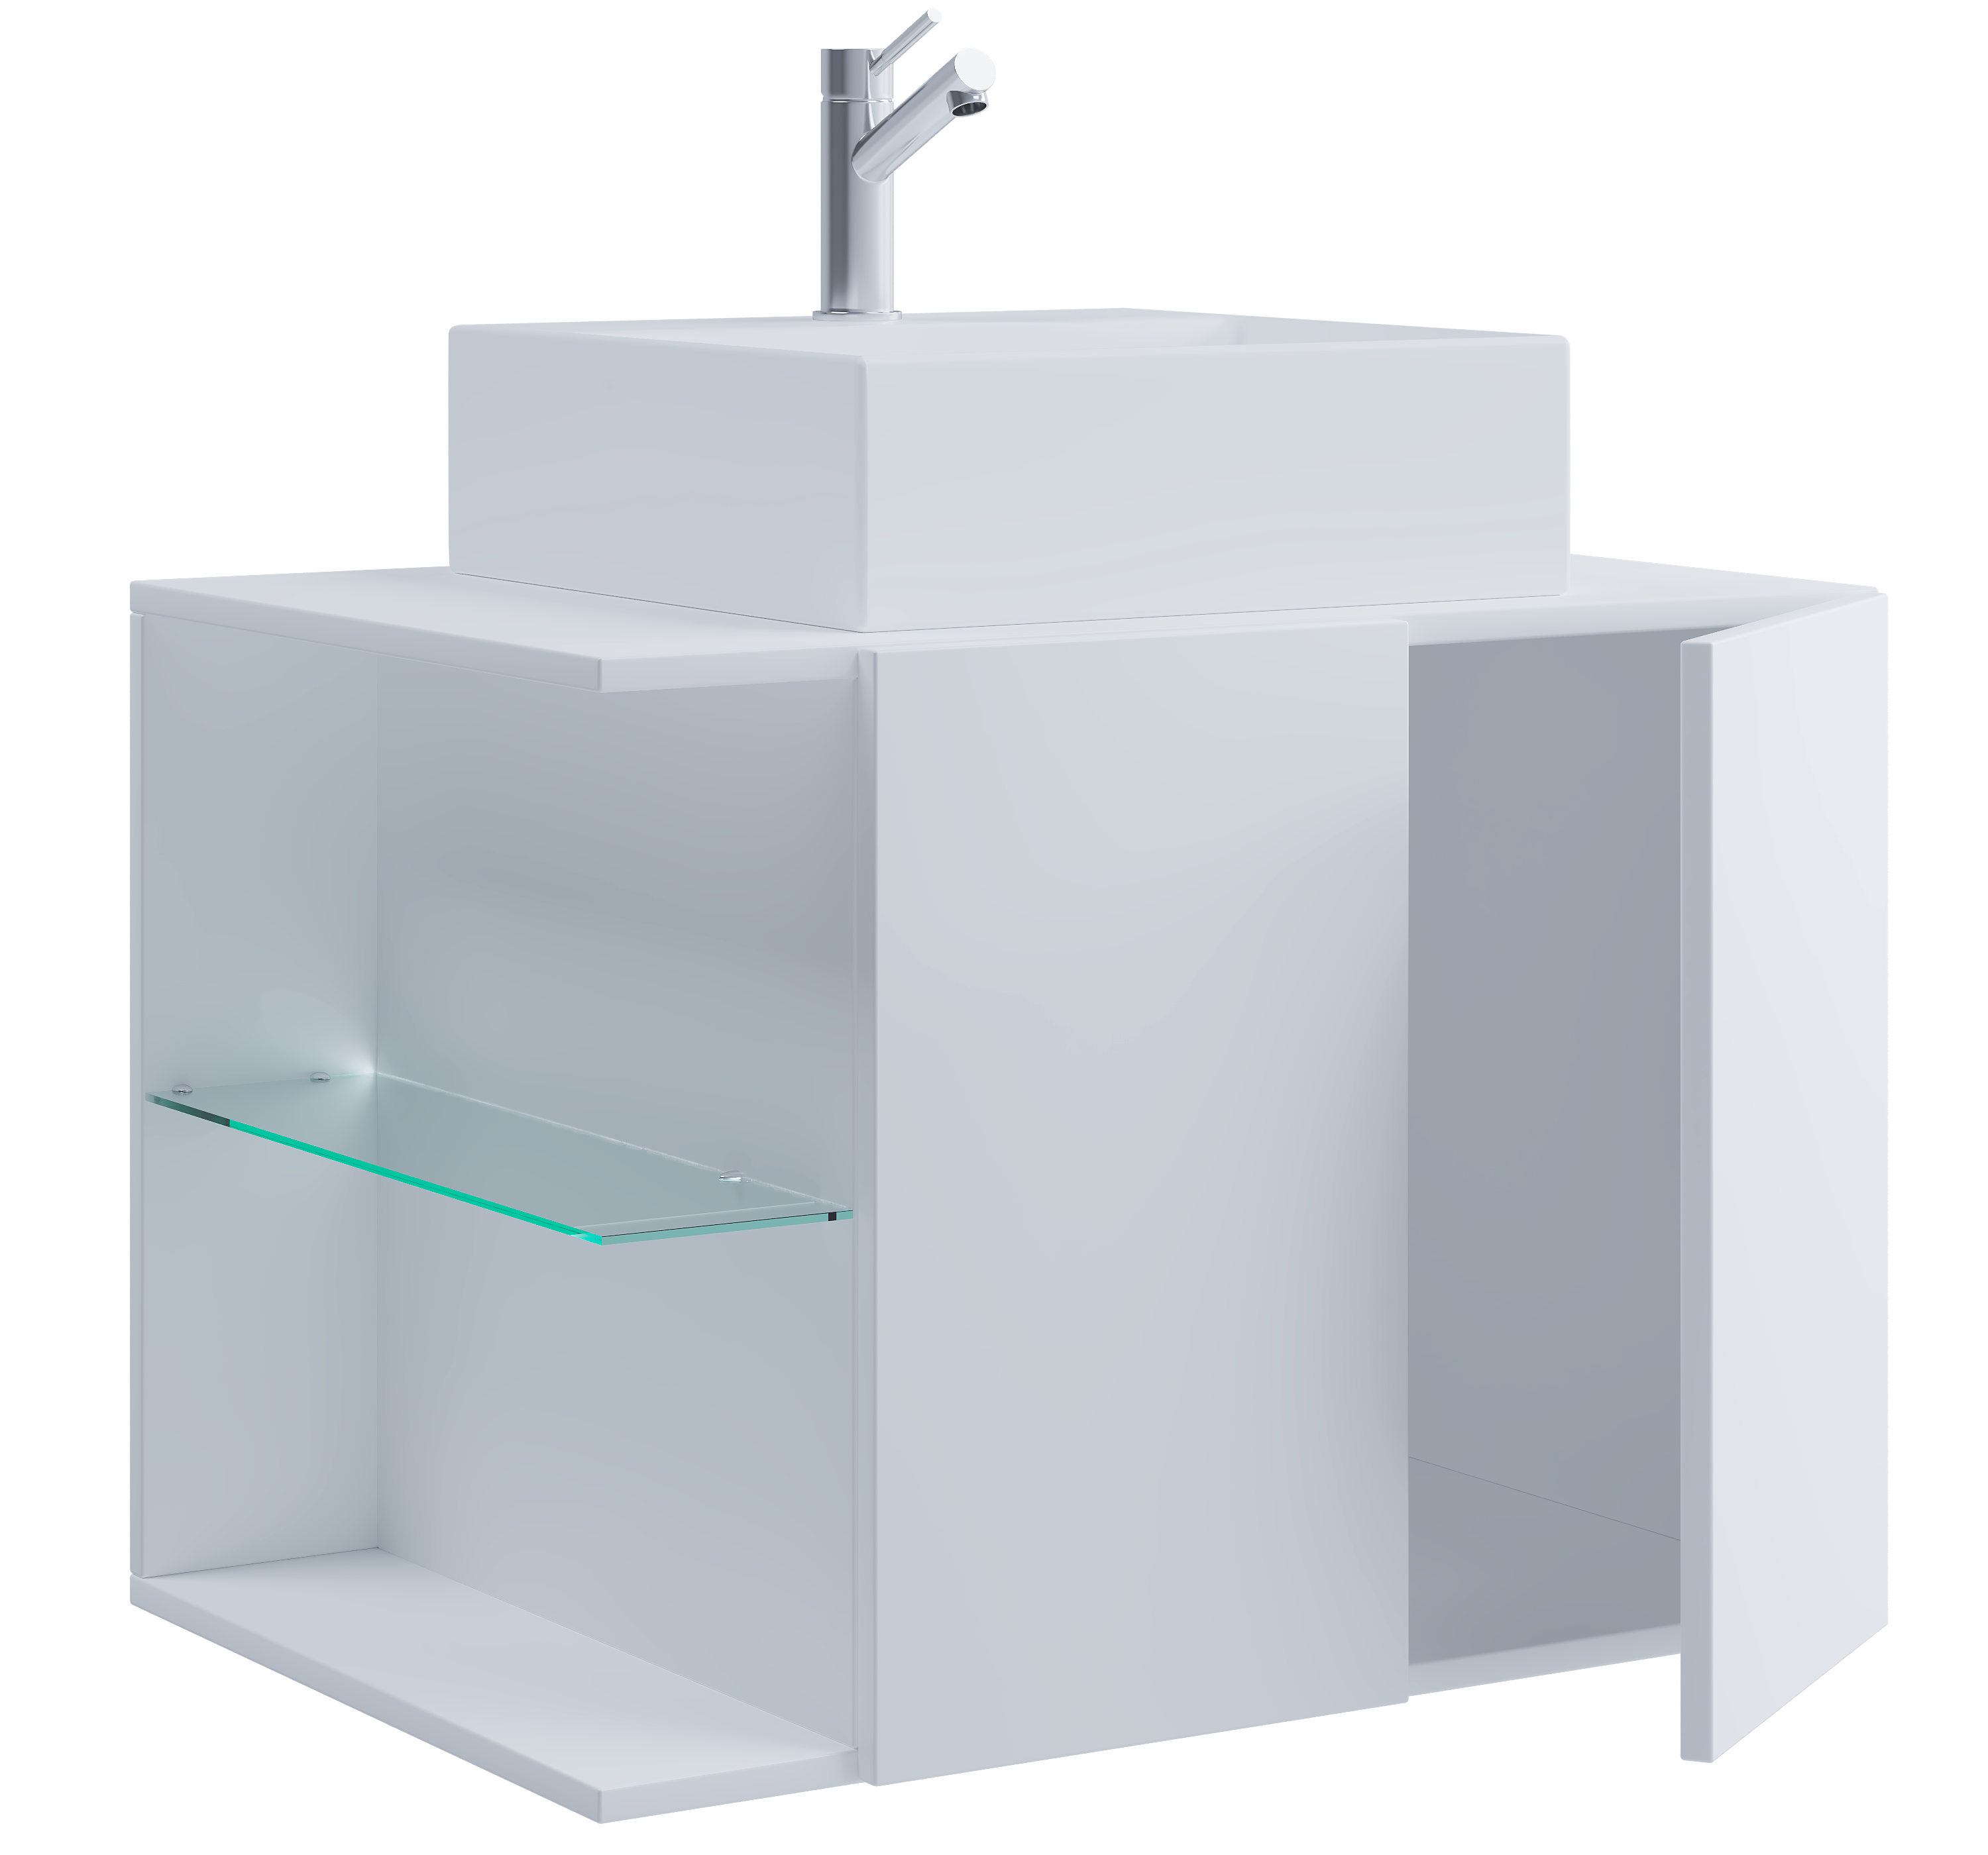 VCM NORDIC Hausa 2 Türen 73 2-delt gæstevaskeplads, m. håndvask, 2 låger, 1 glashylde - hvid melamin